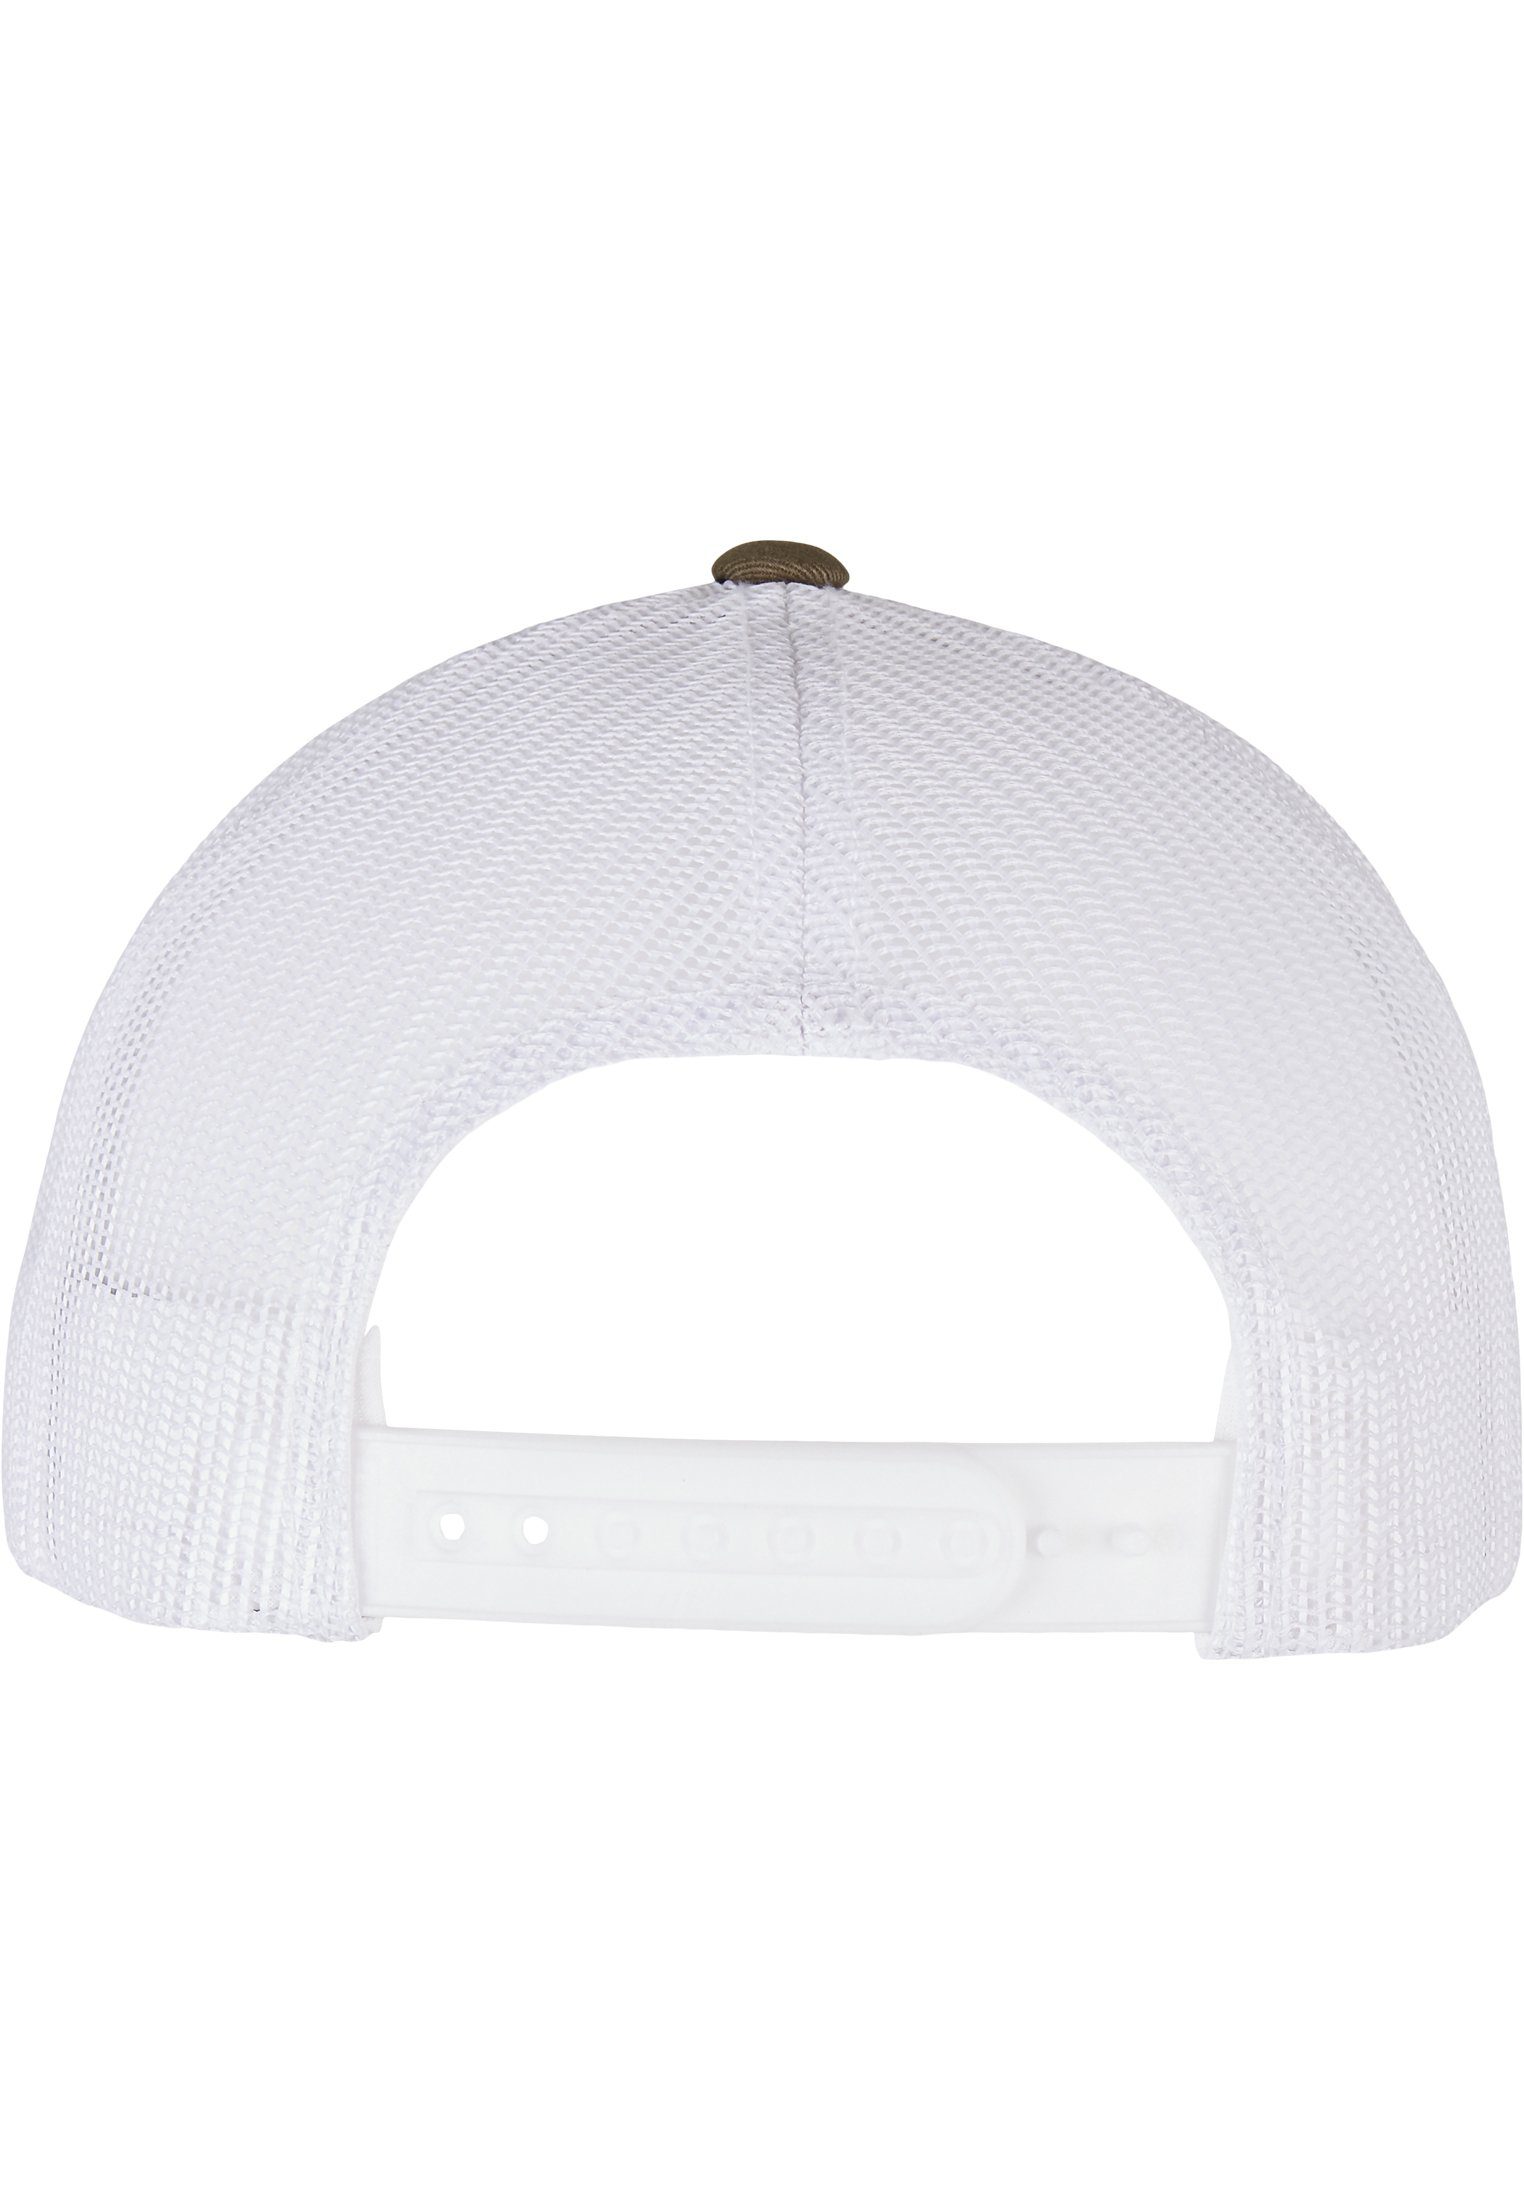 olive/white Flexfit TRUCKER 2-TONE Cap Caps CLASSICS Flex RECYCLED YP RETRO CAP